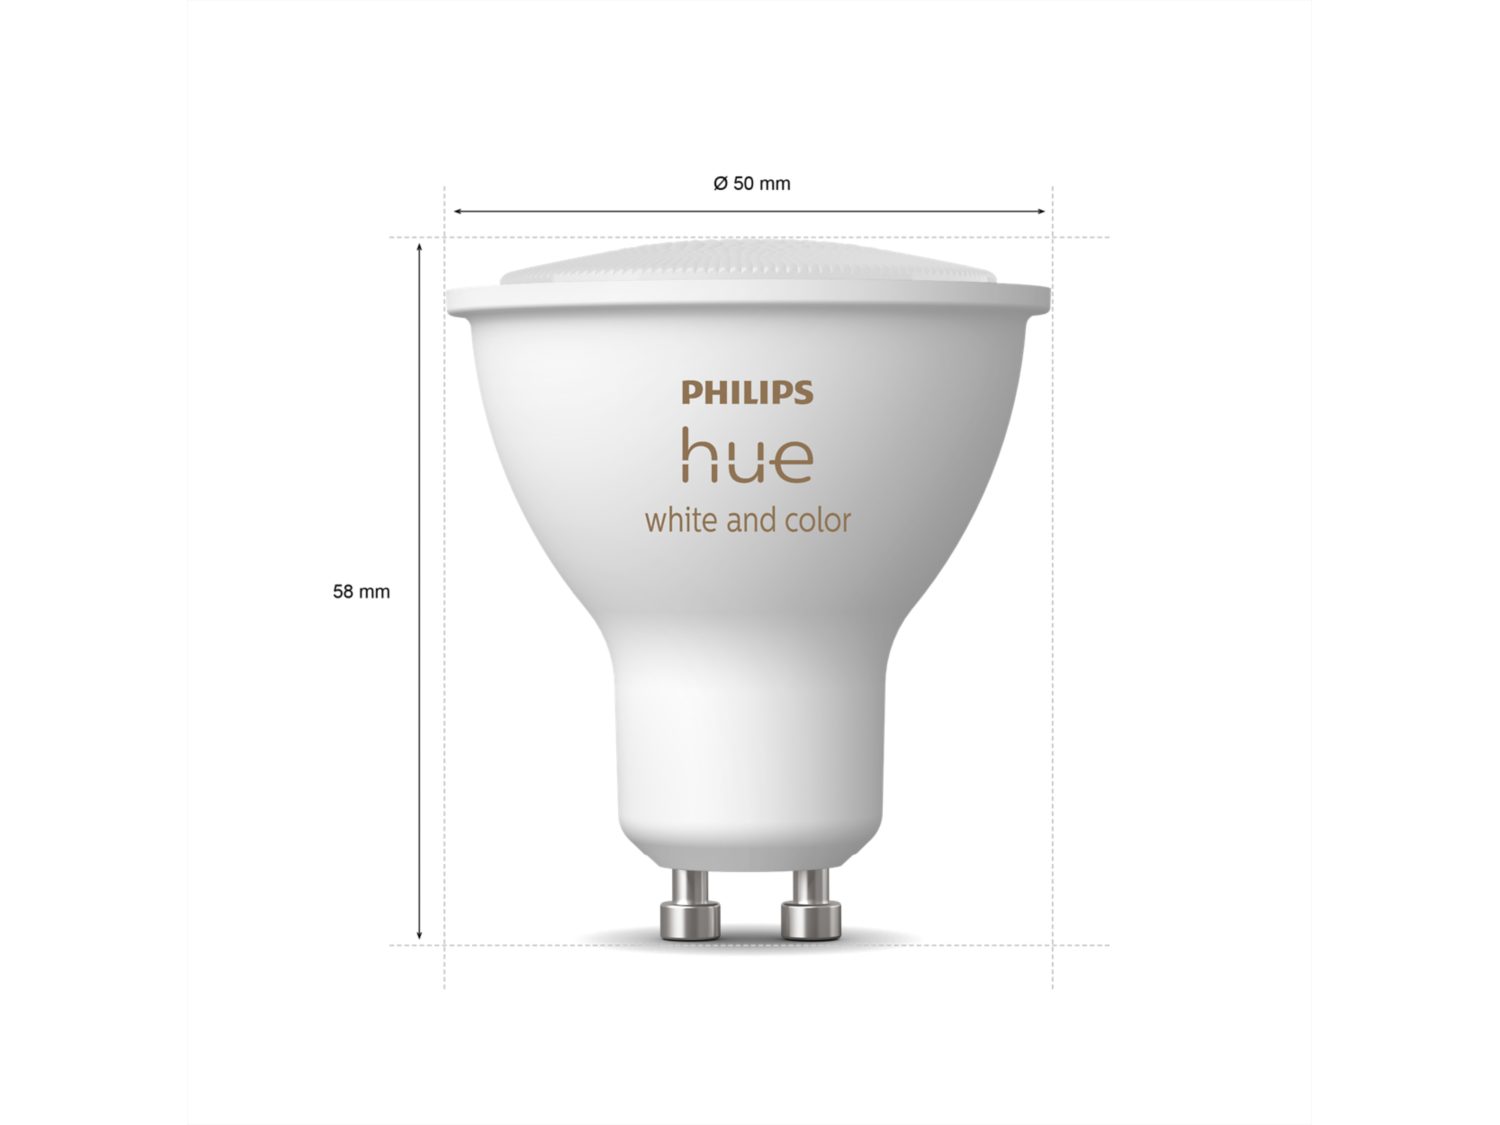 Philips Hue GU10